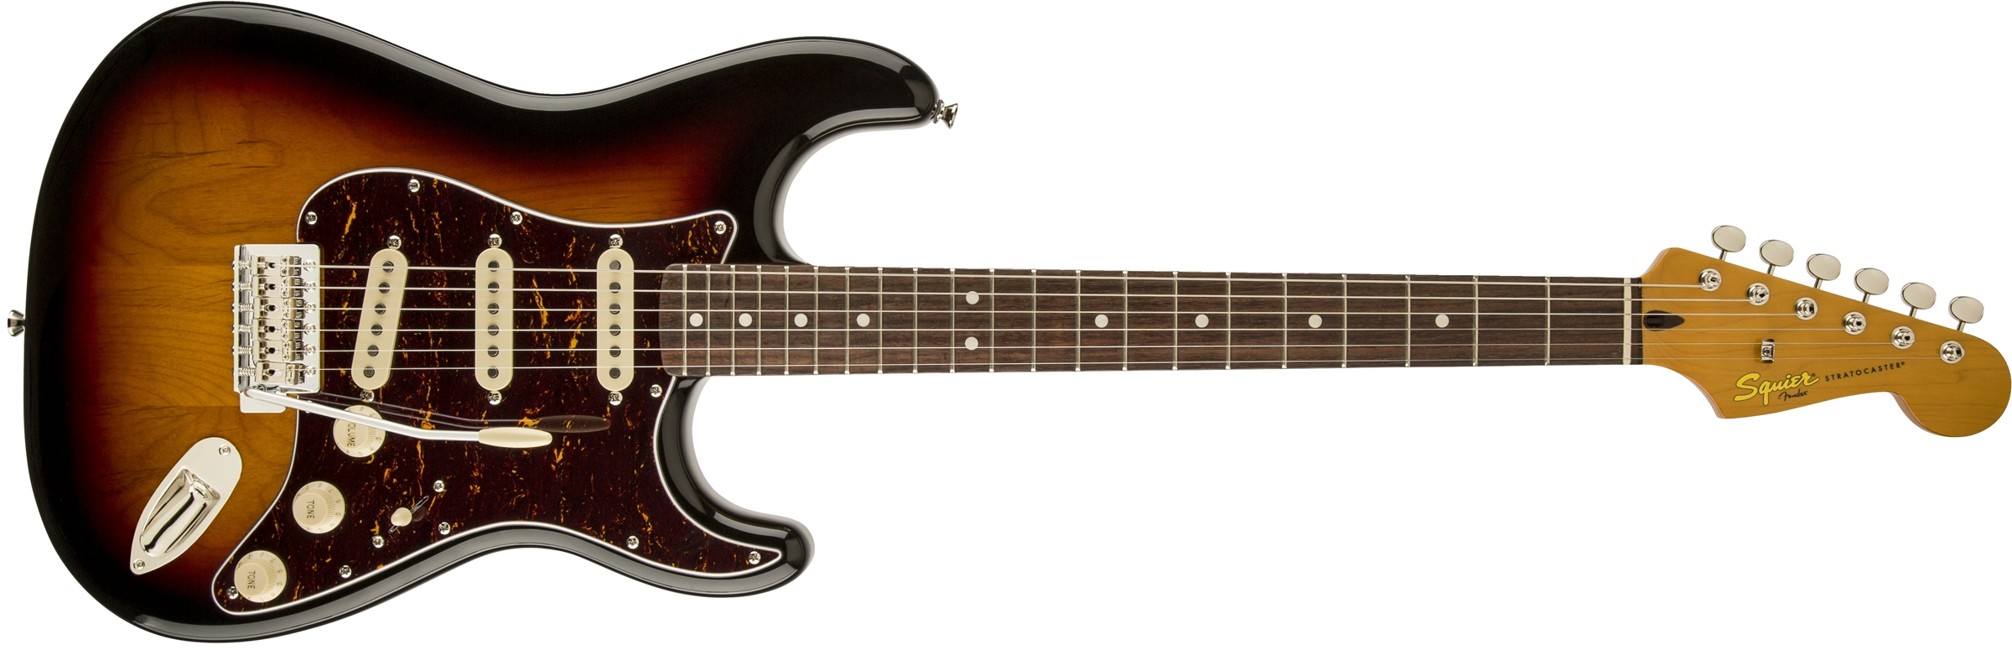 Squier By Fender - Classic Vibe 60's Stratocaster - Elektrisk Guitar (3-Color Sunburst)